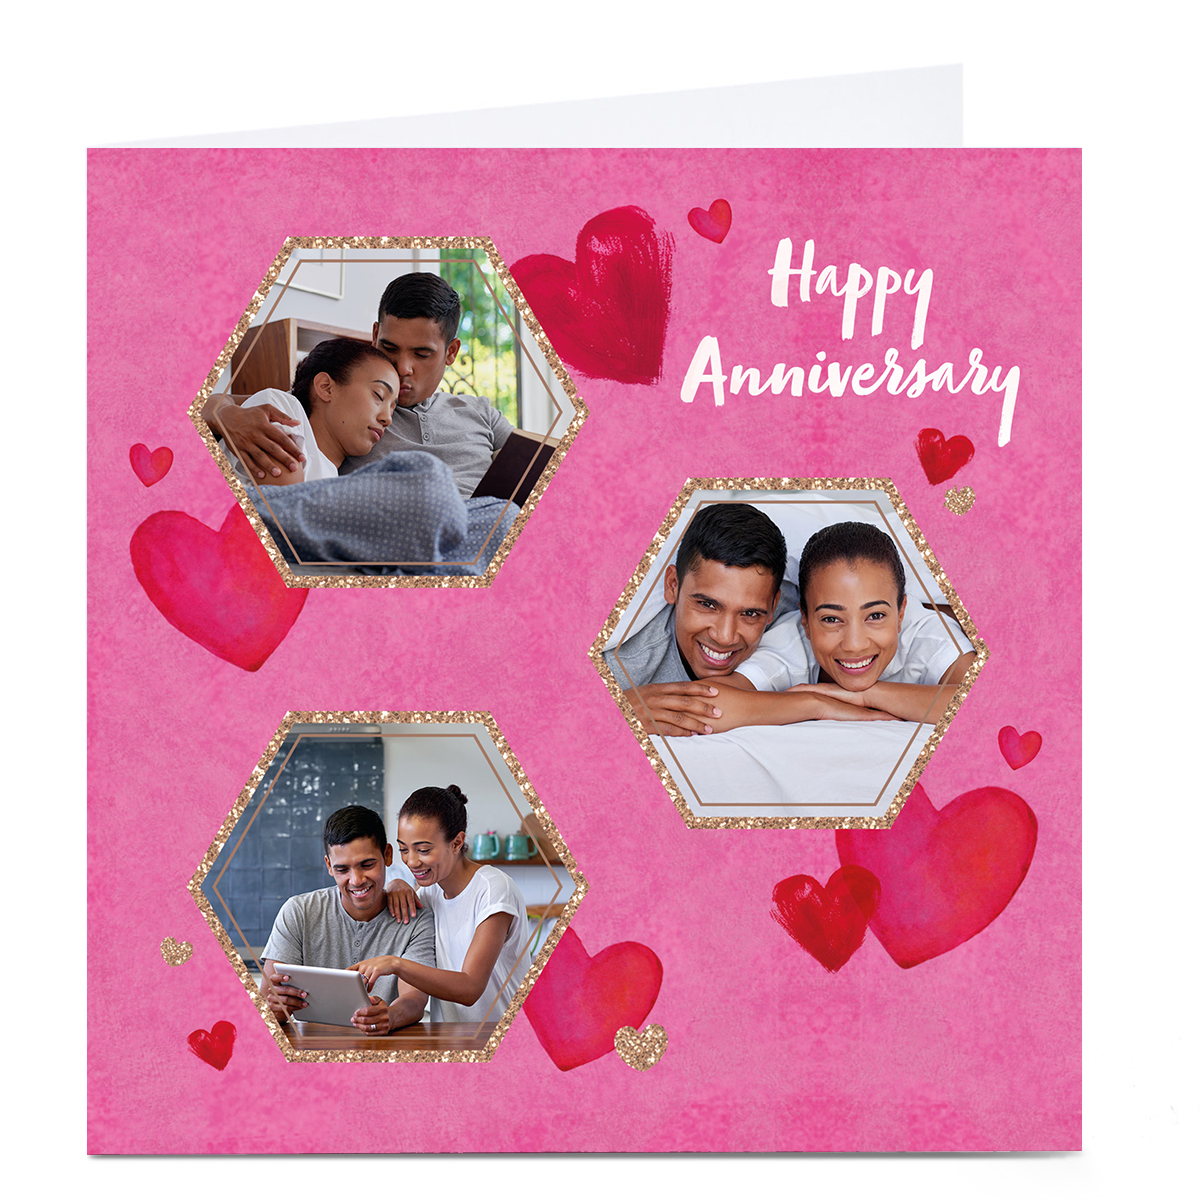 Personalised Anniversary Photo Card - Hearts & Glitter Hexagons